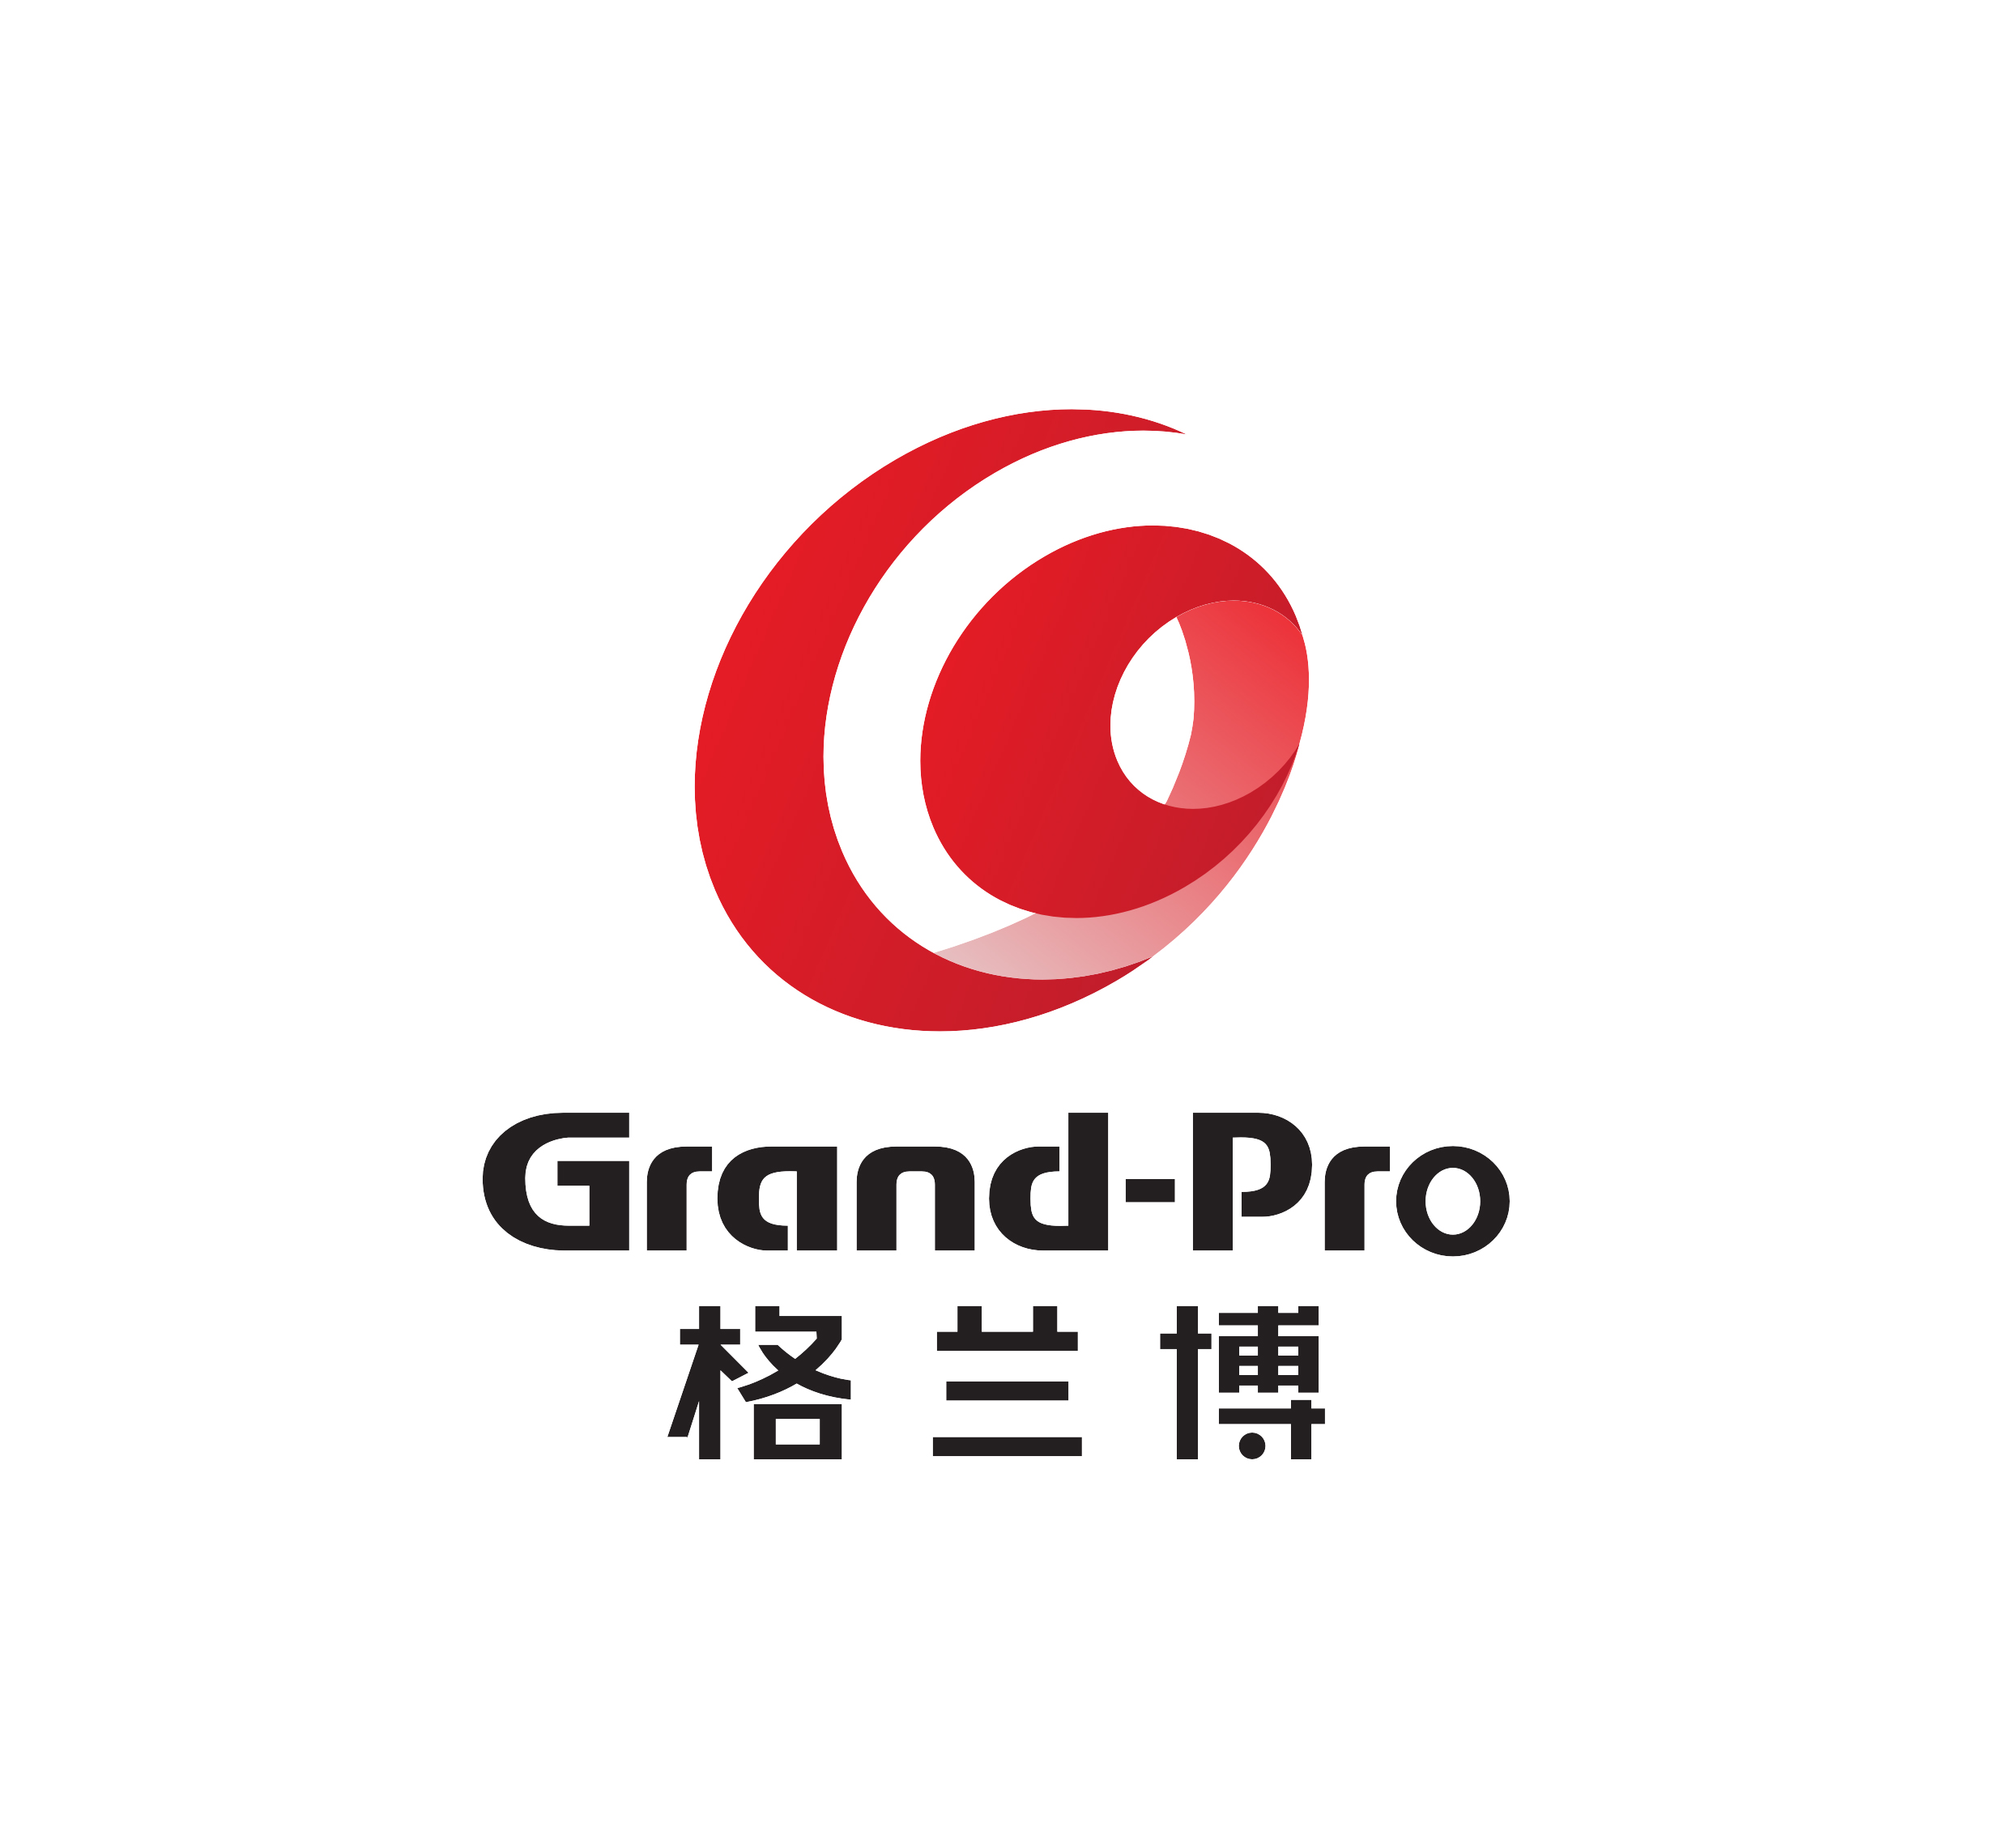 Hunan Grand-Pro Robot Technology Co.,Ltd